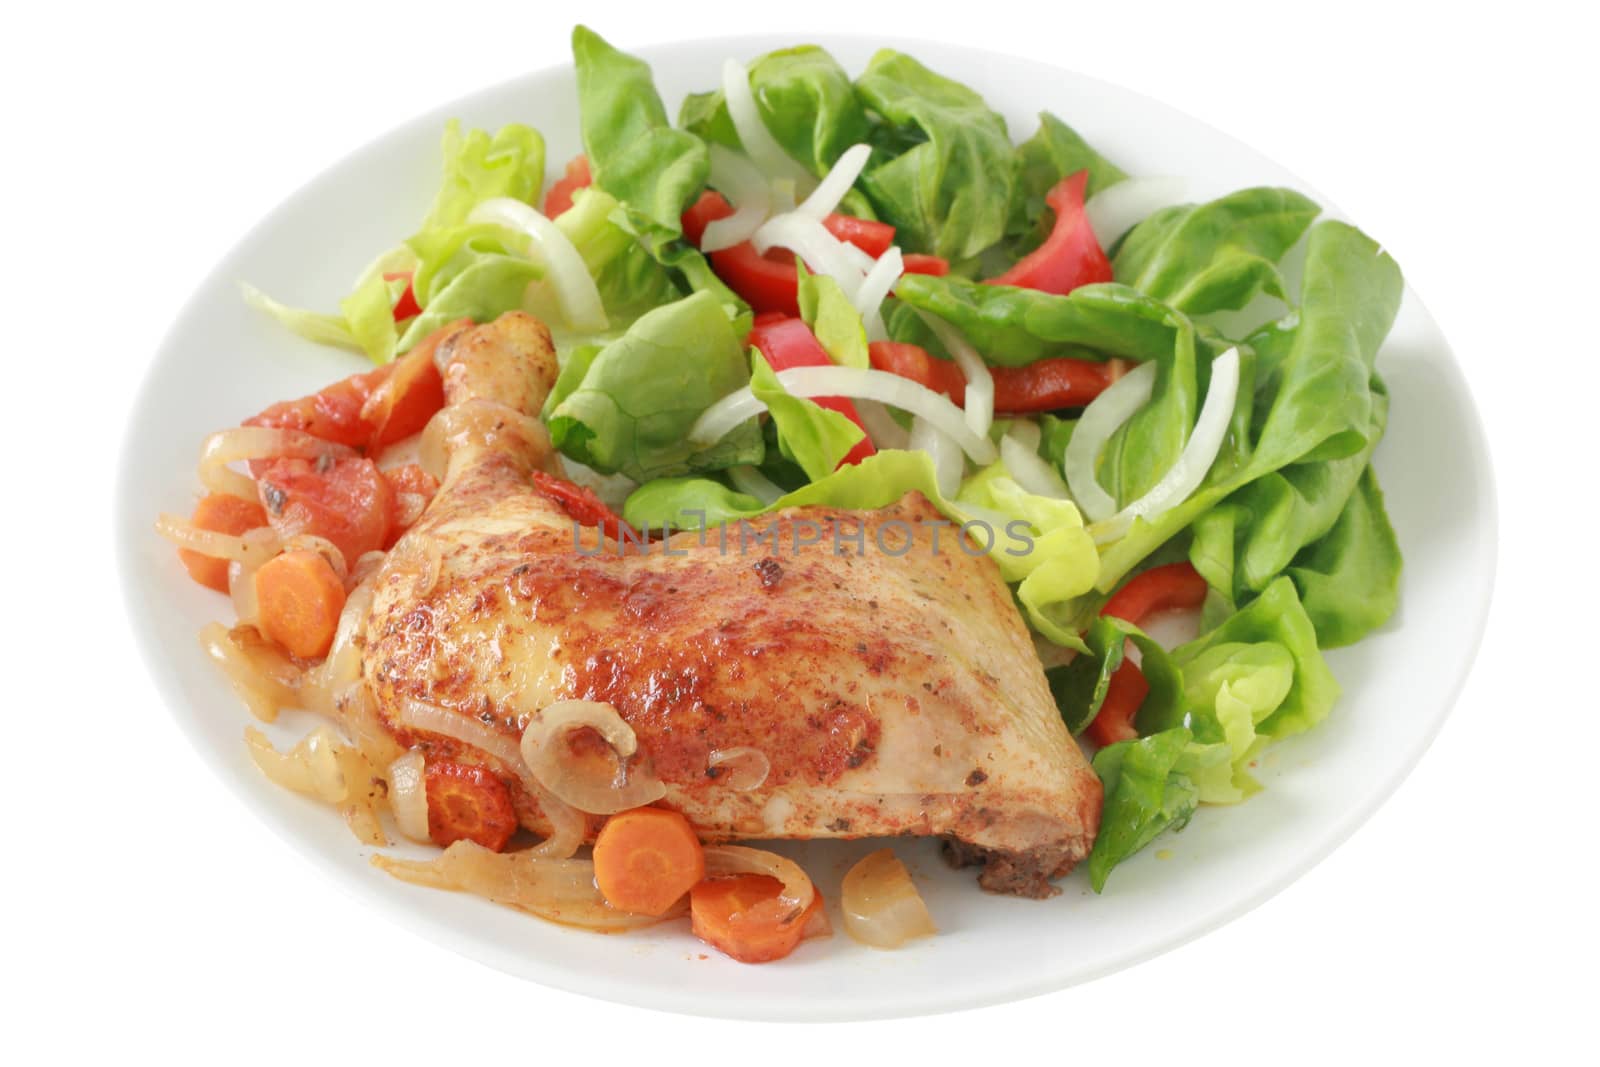 fried chicken with salad by nataliamylova